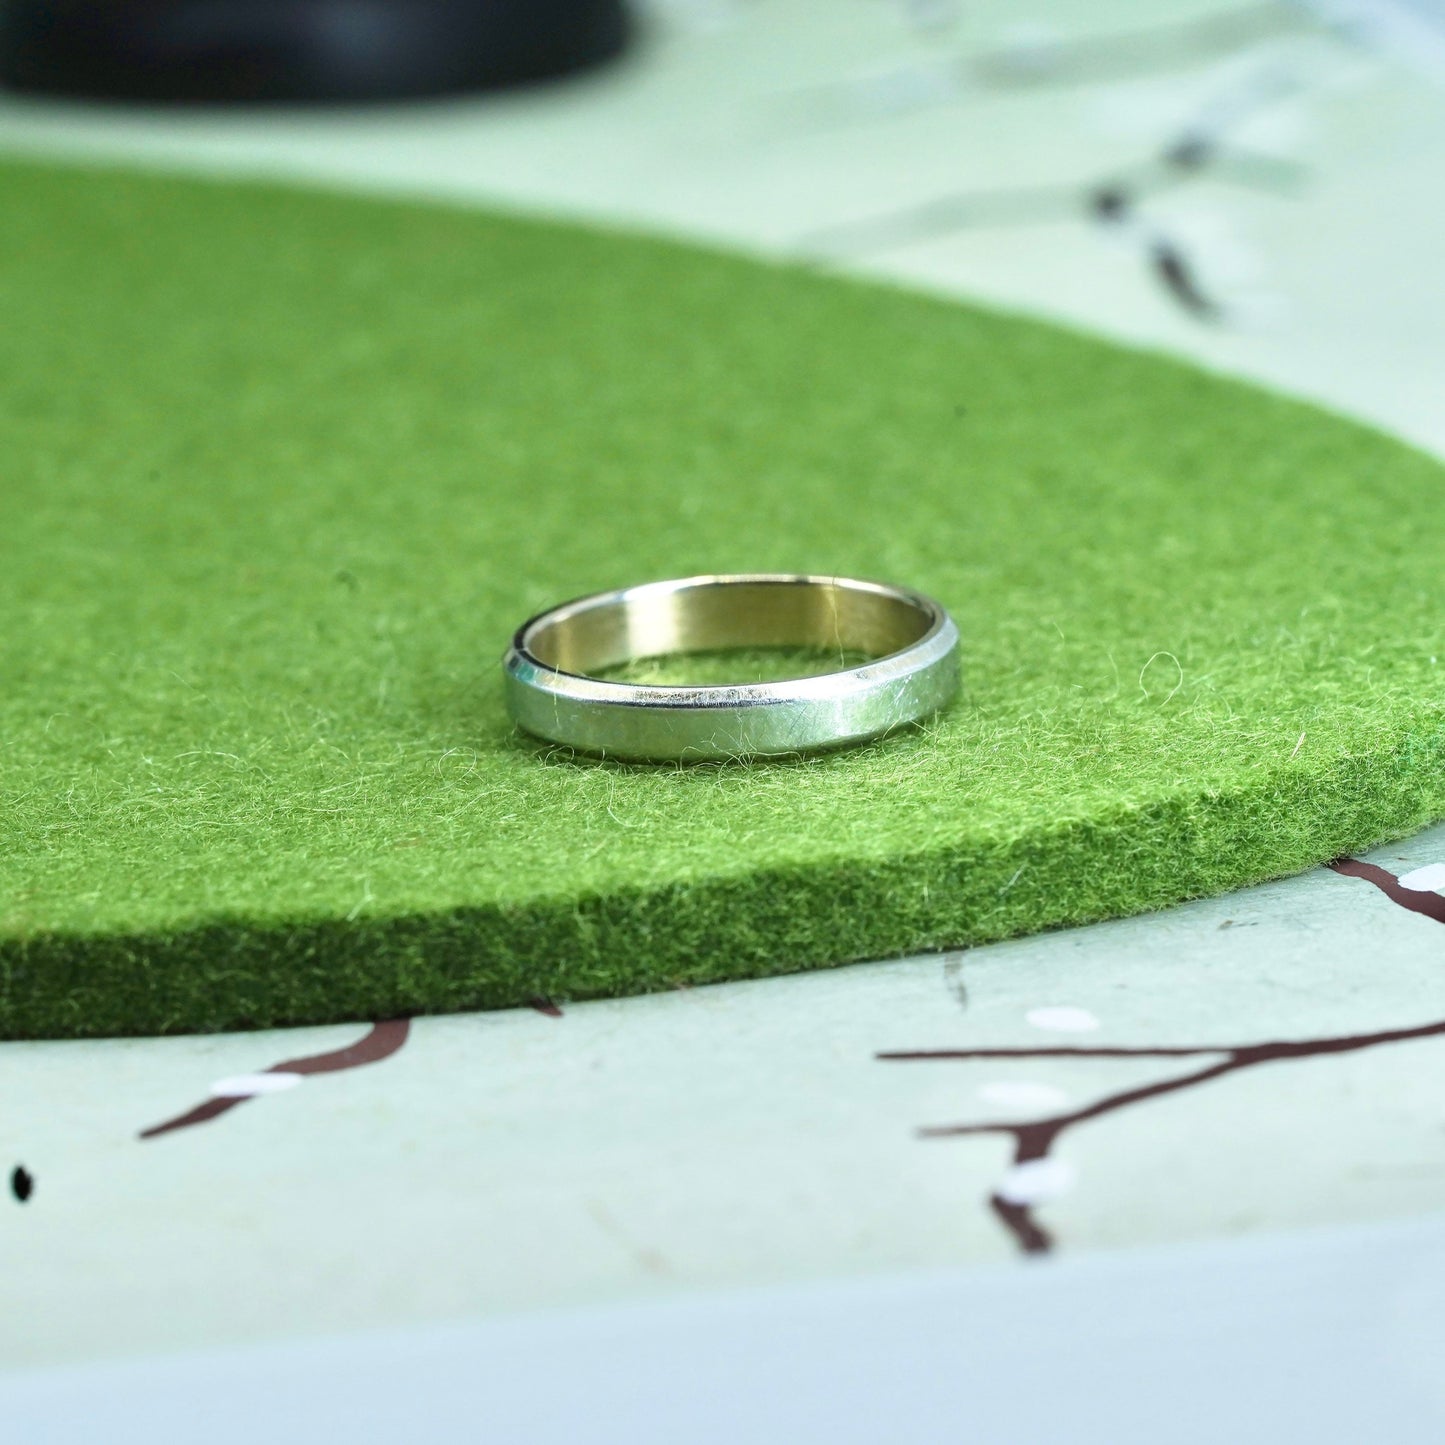 Size 10, 2.8g, 18K white gold engagement ring, wedding band “forever love”